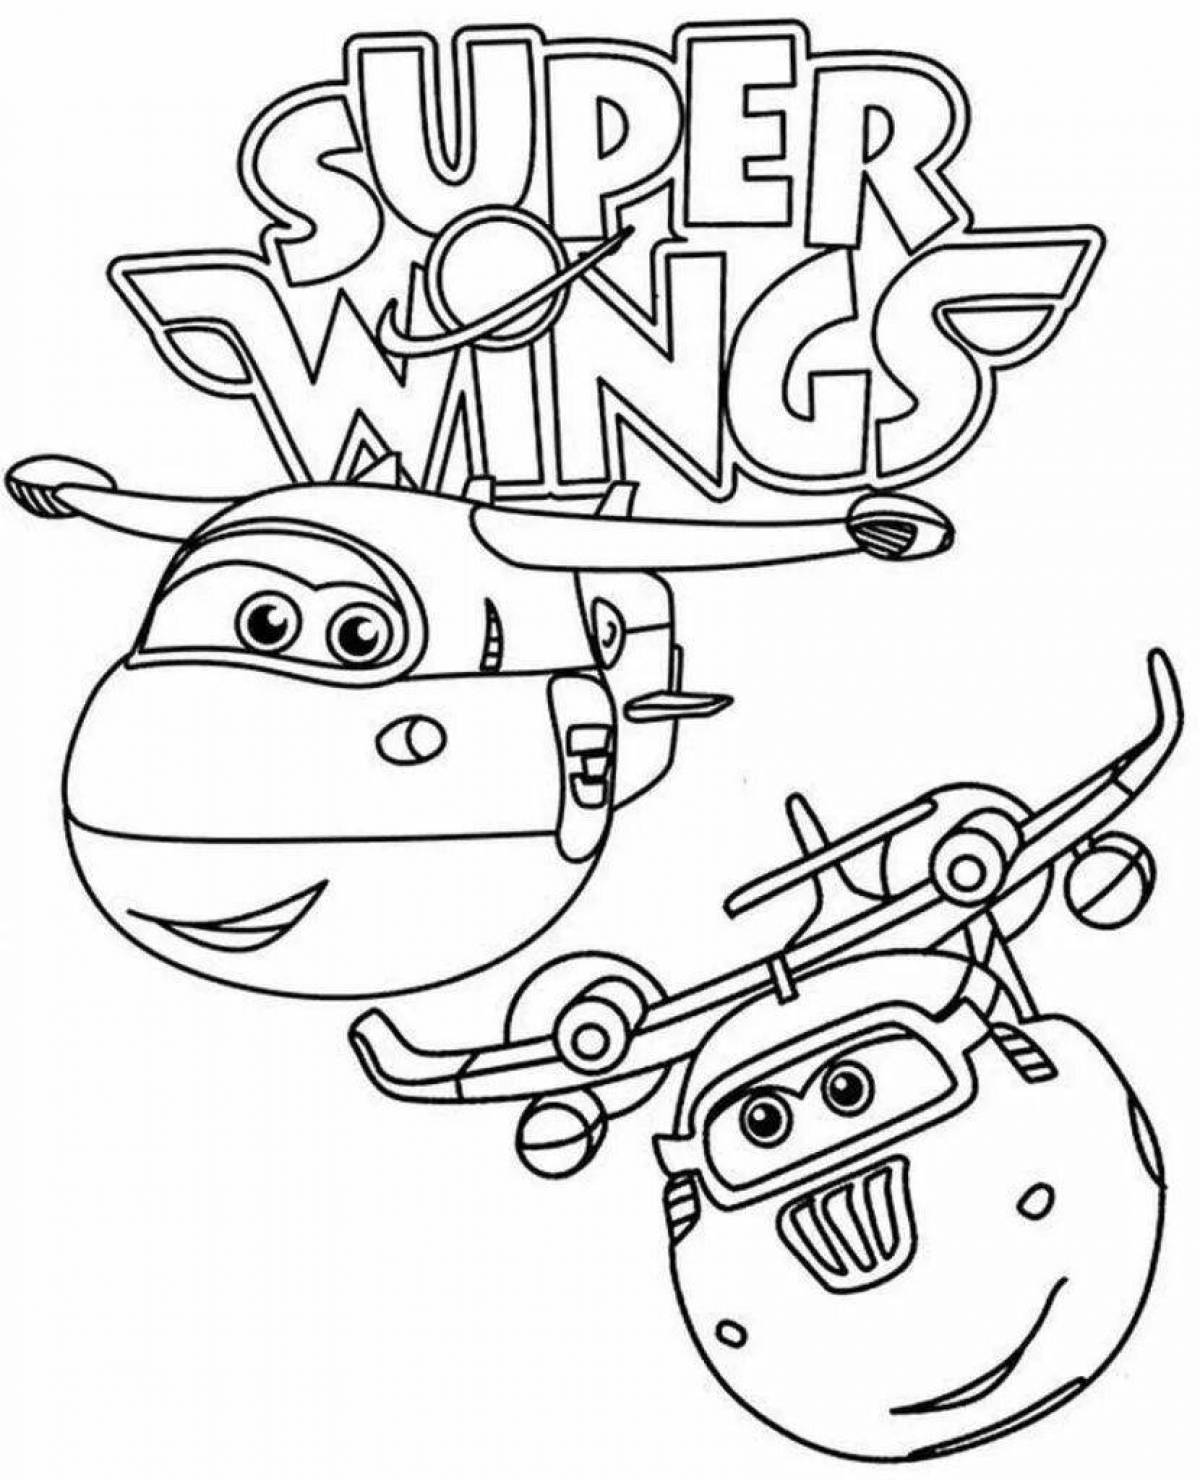 Cute super wings coloring book